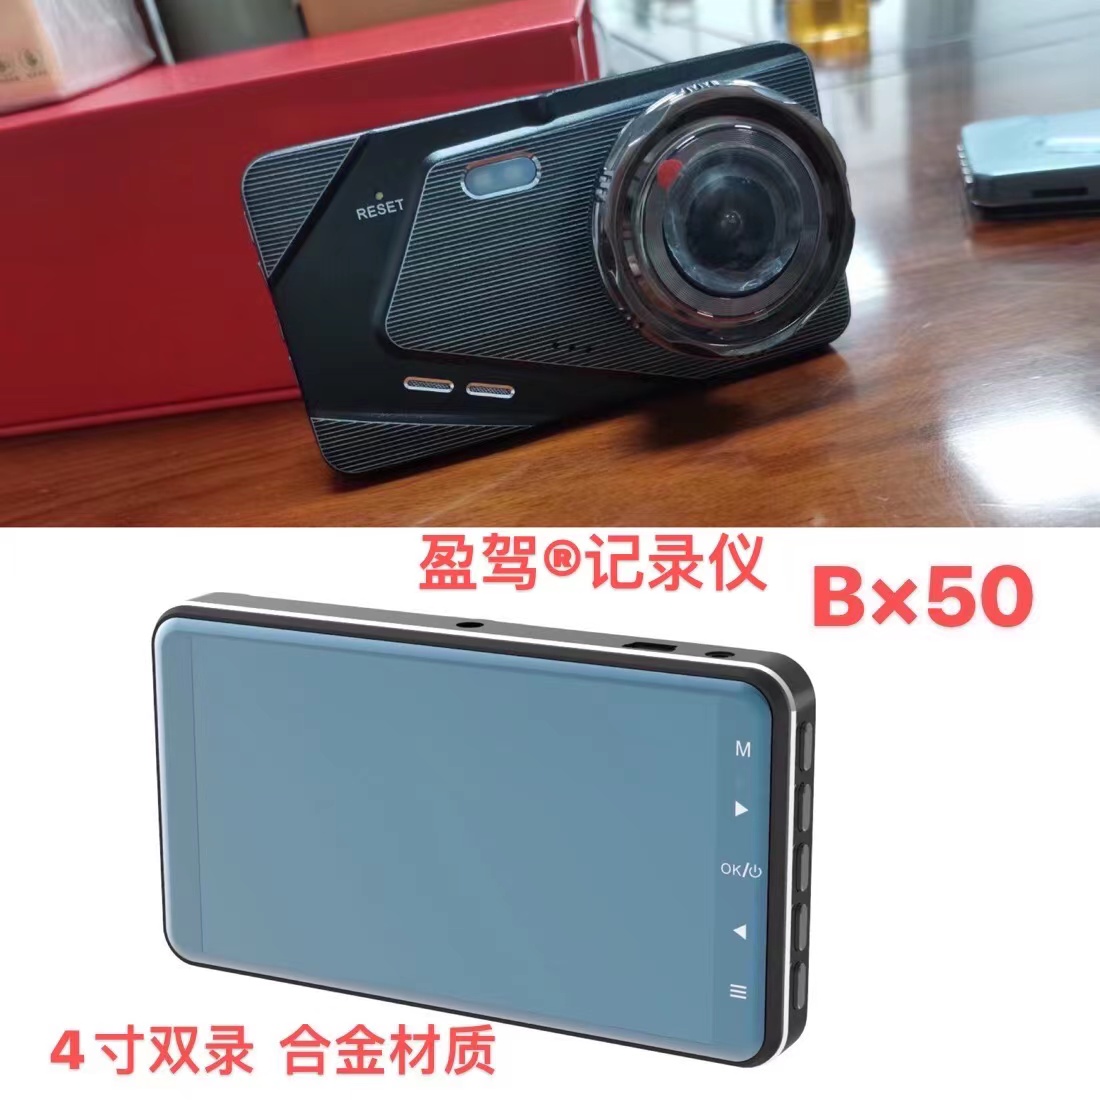 Kamera vozila --YJ brand -- novi proizvod -- BX50 je predstavljen